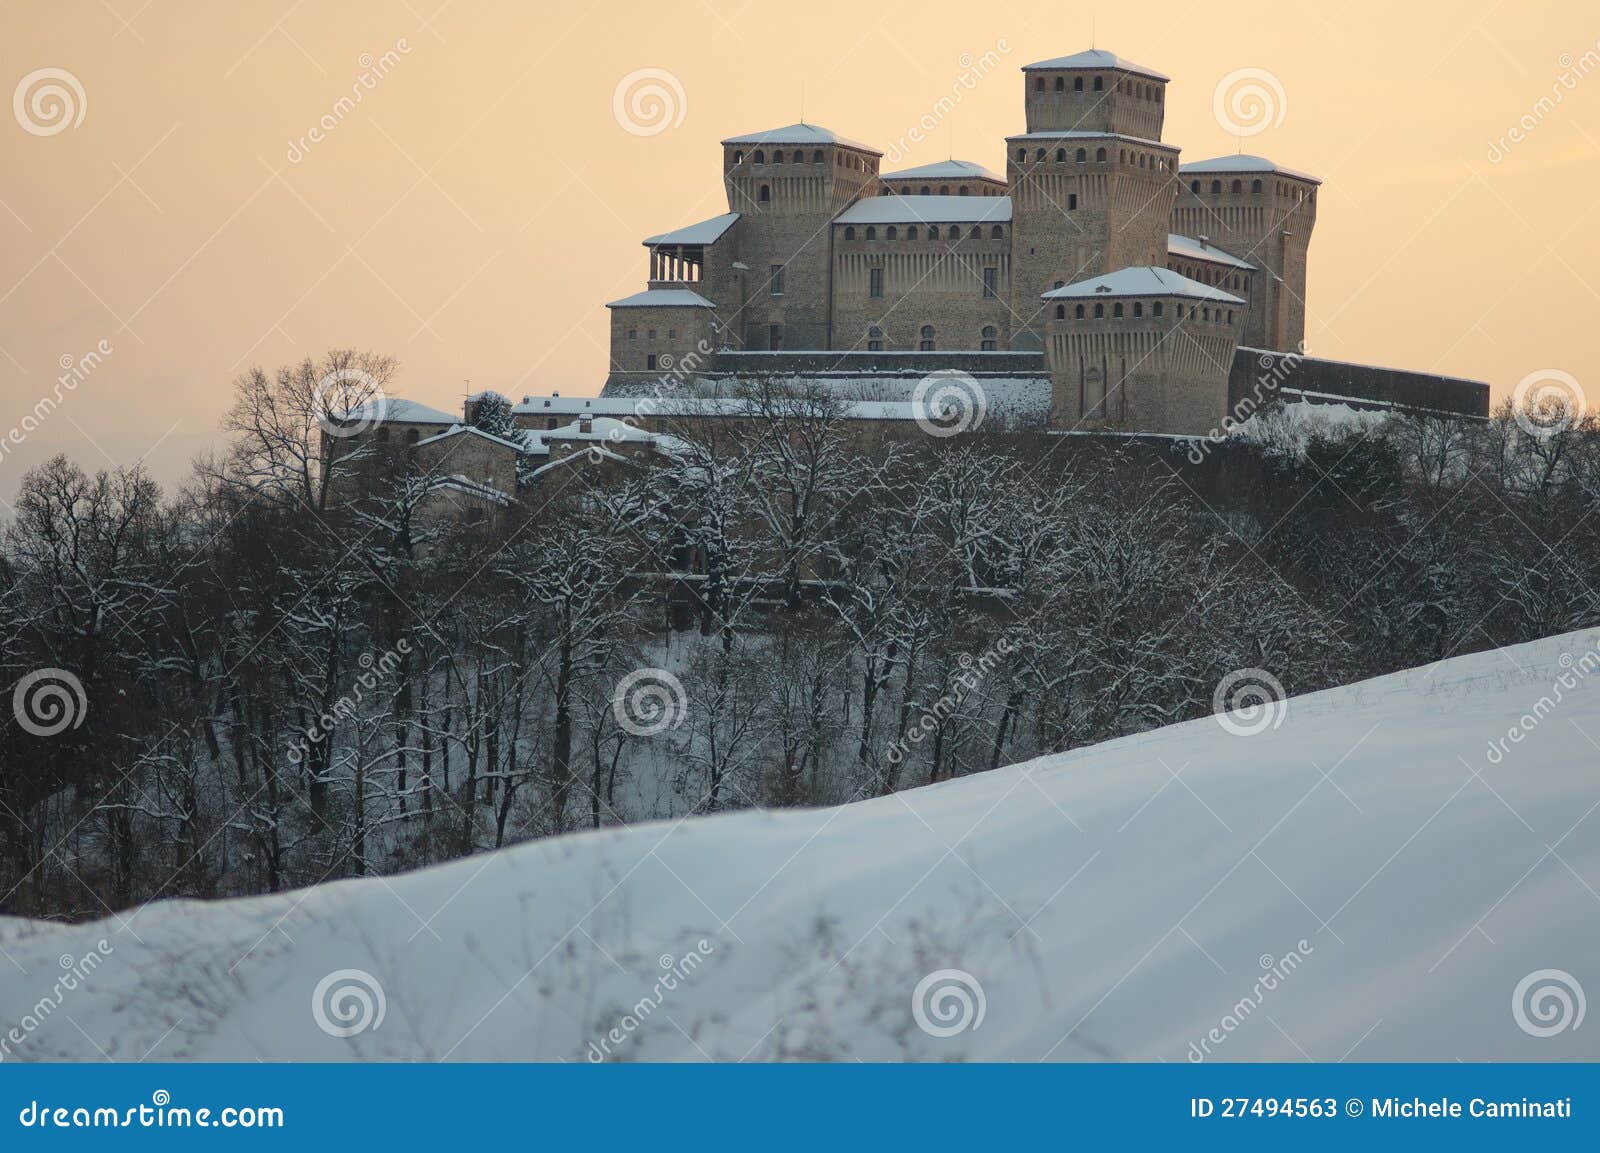 castle of torrechiara under the snow